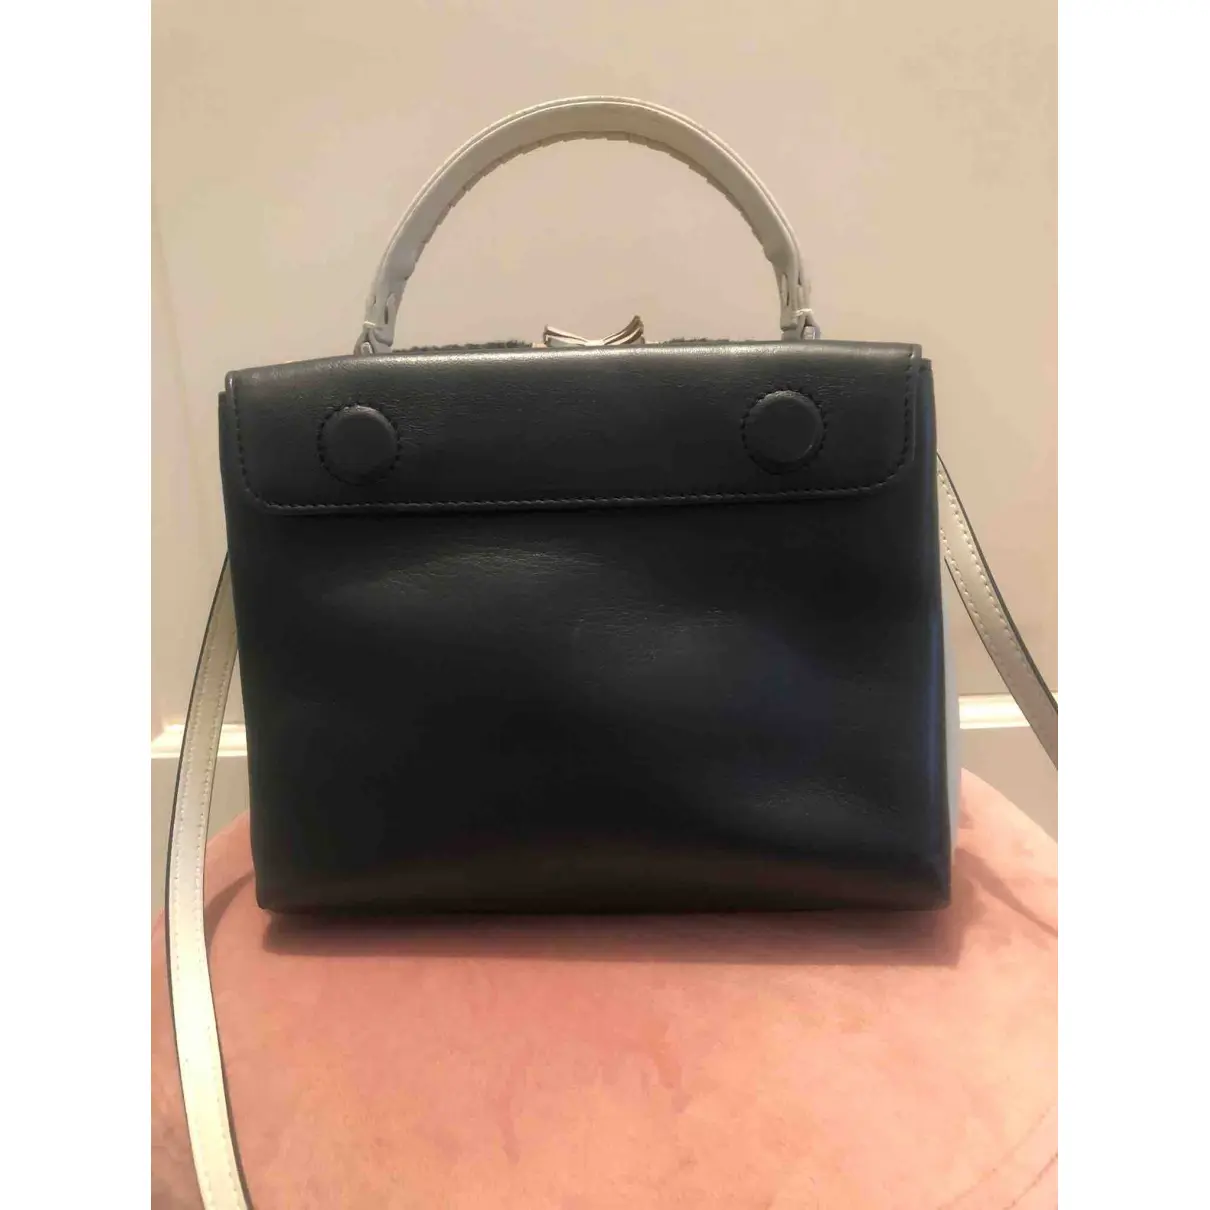 Buy Paula Cademartori Leather handbag online